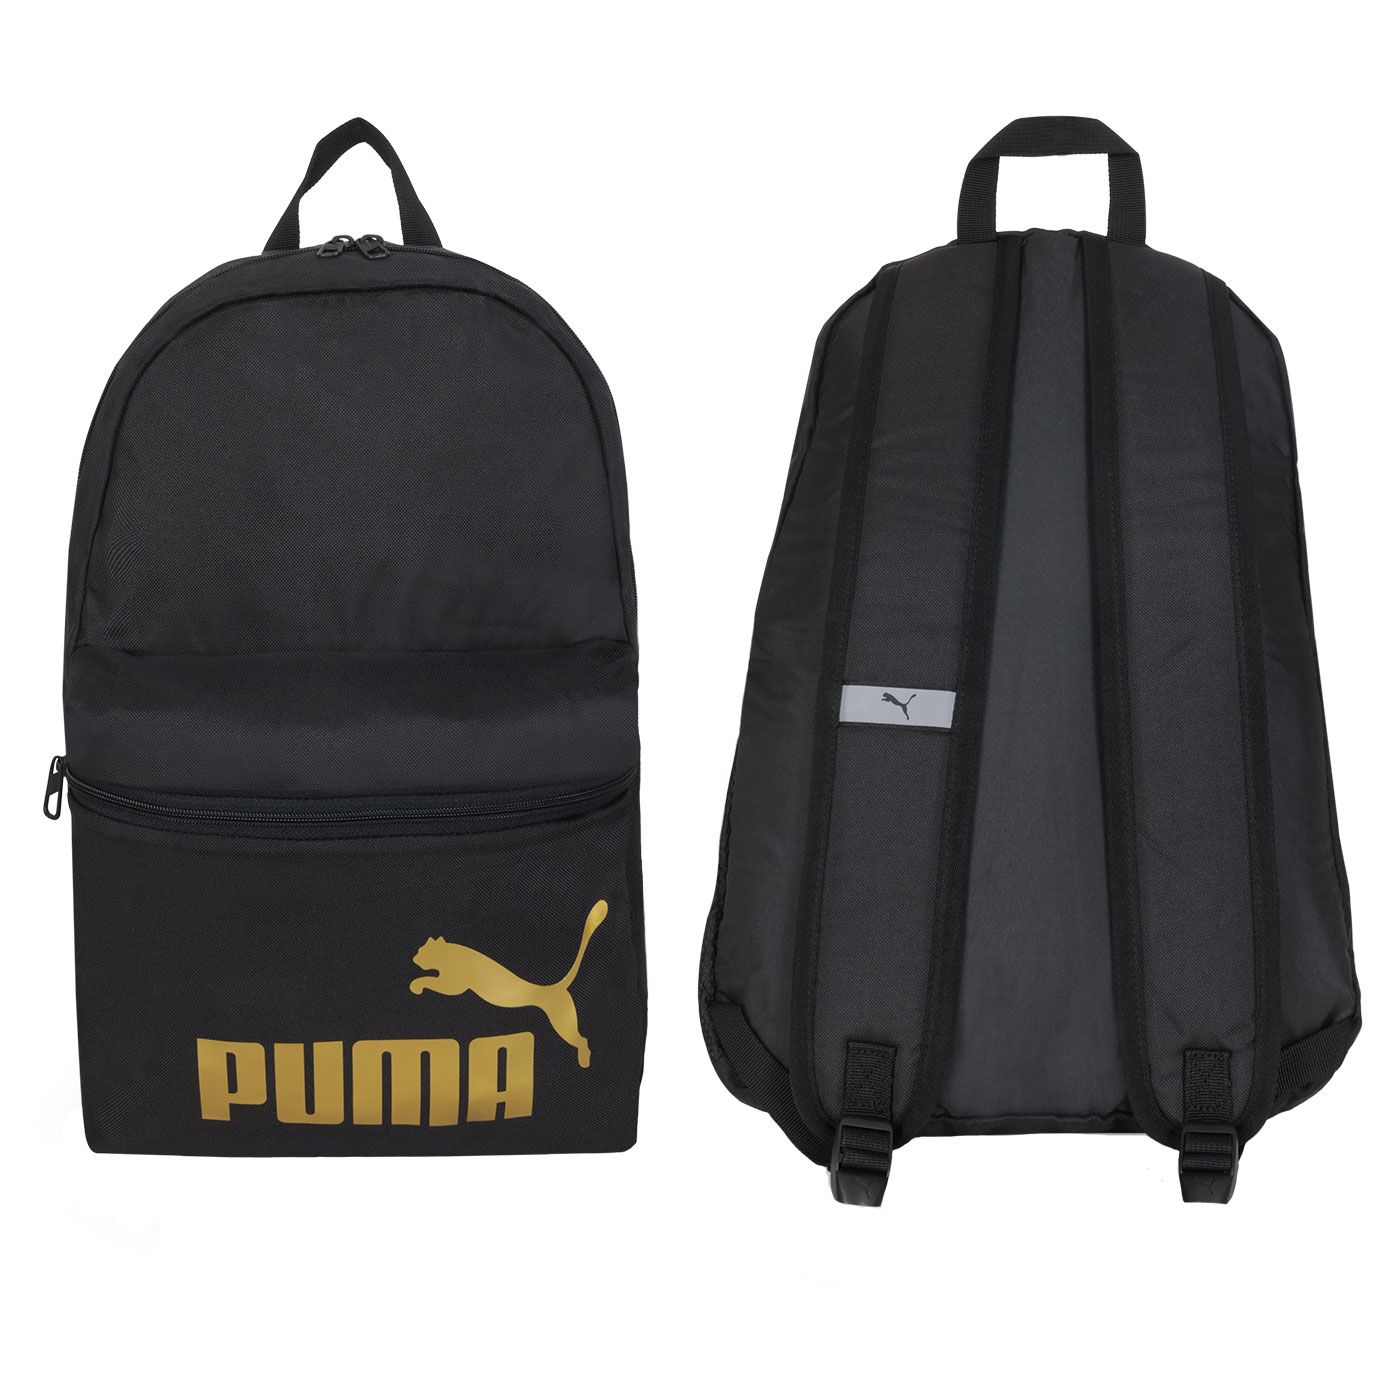 PUMA 大型後背包  07994303 - 黑金